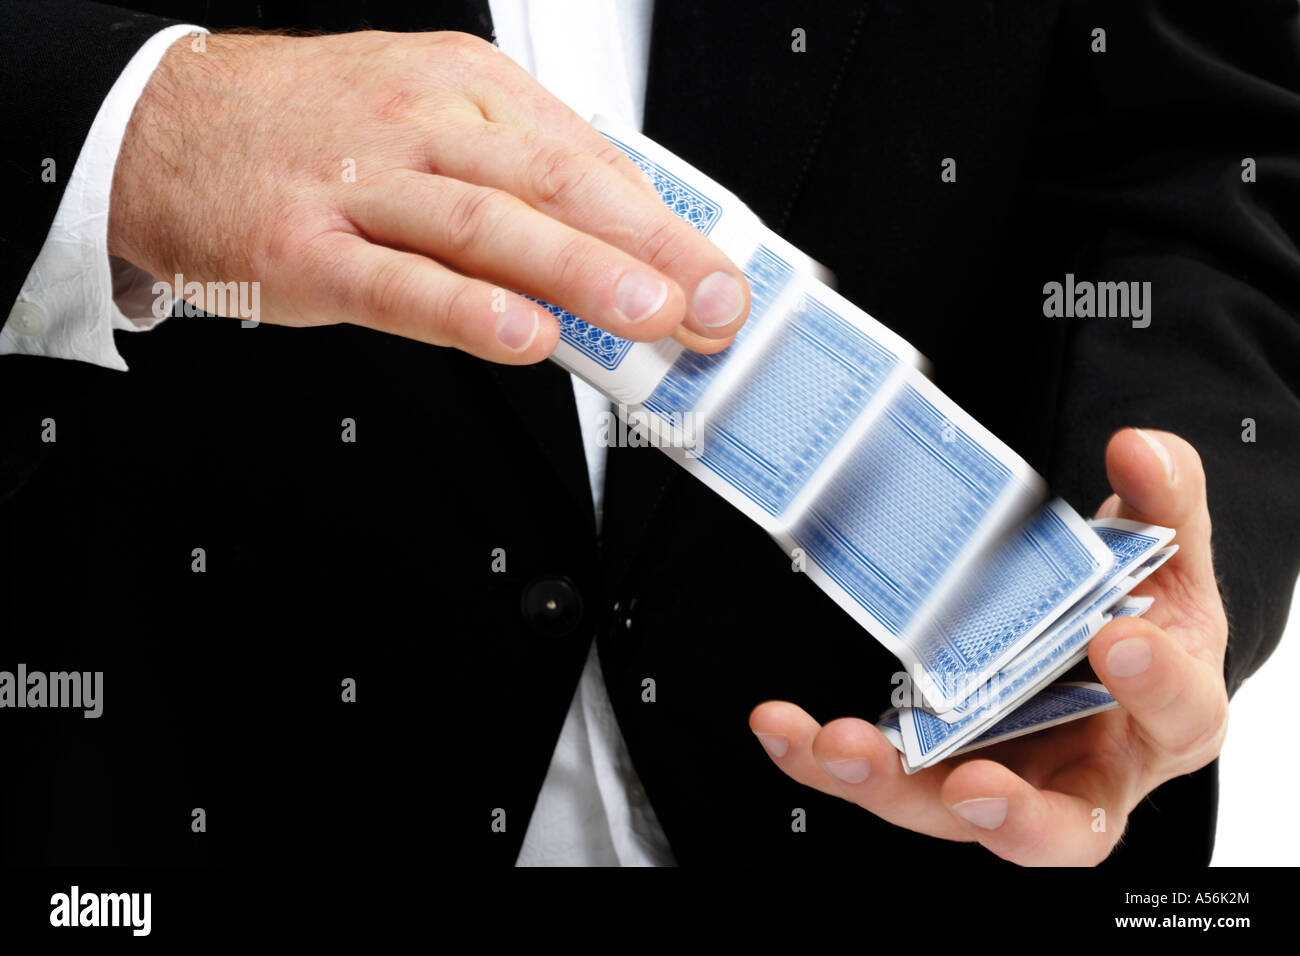 Man shuffling deck of cards, close-up Stock Photo